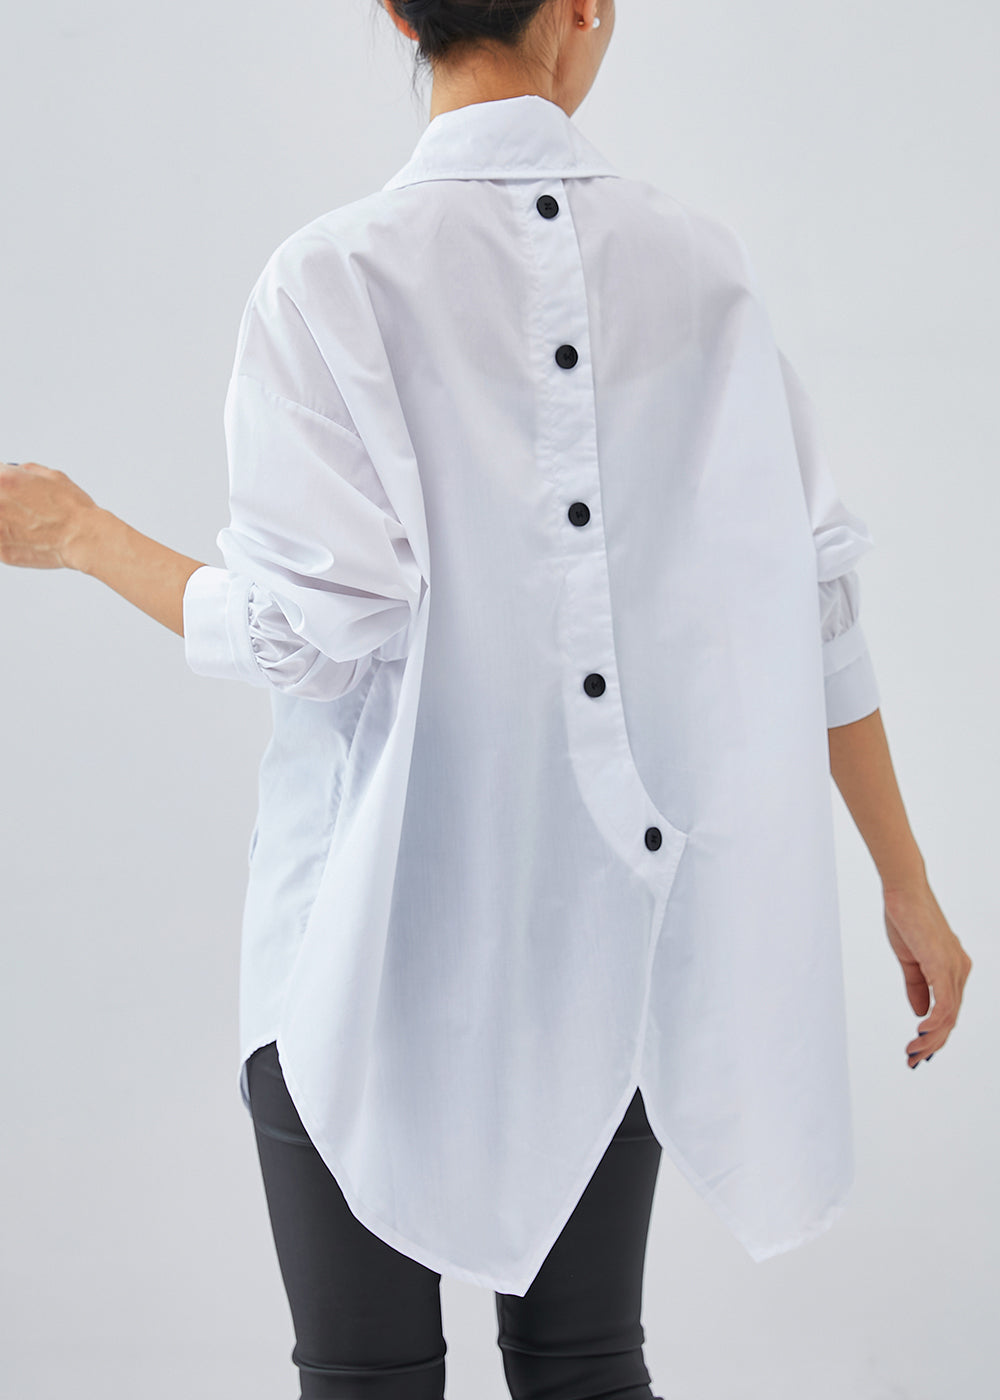 French White Asymmetrical Design Cotton Shirts Fall